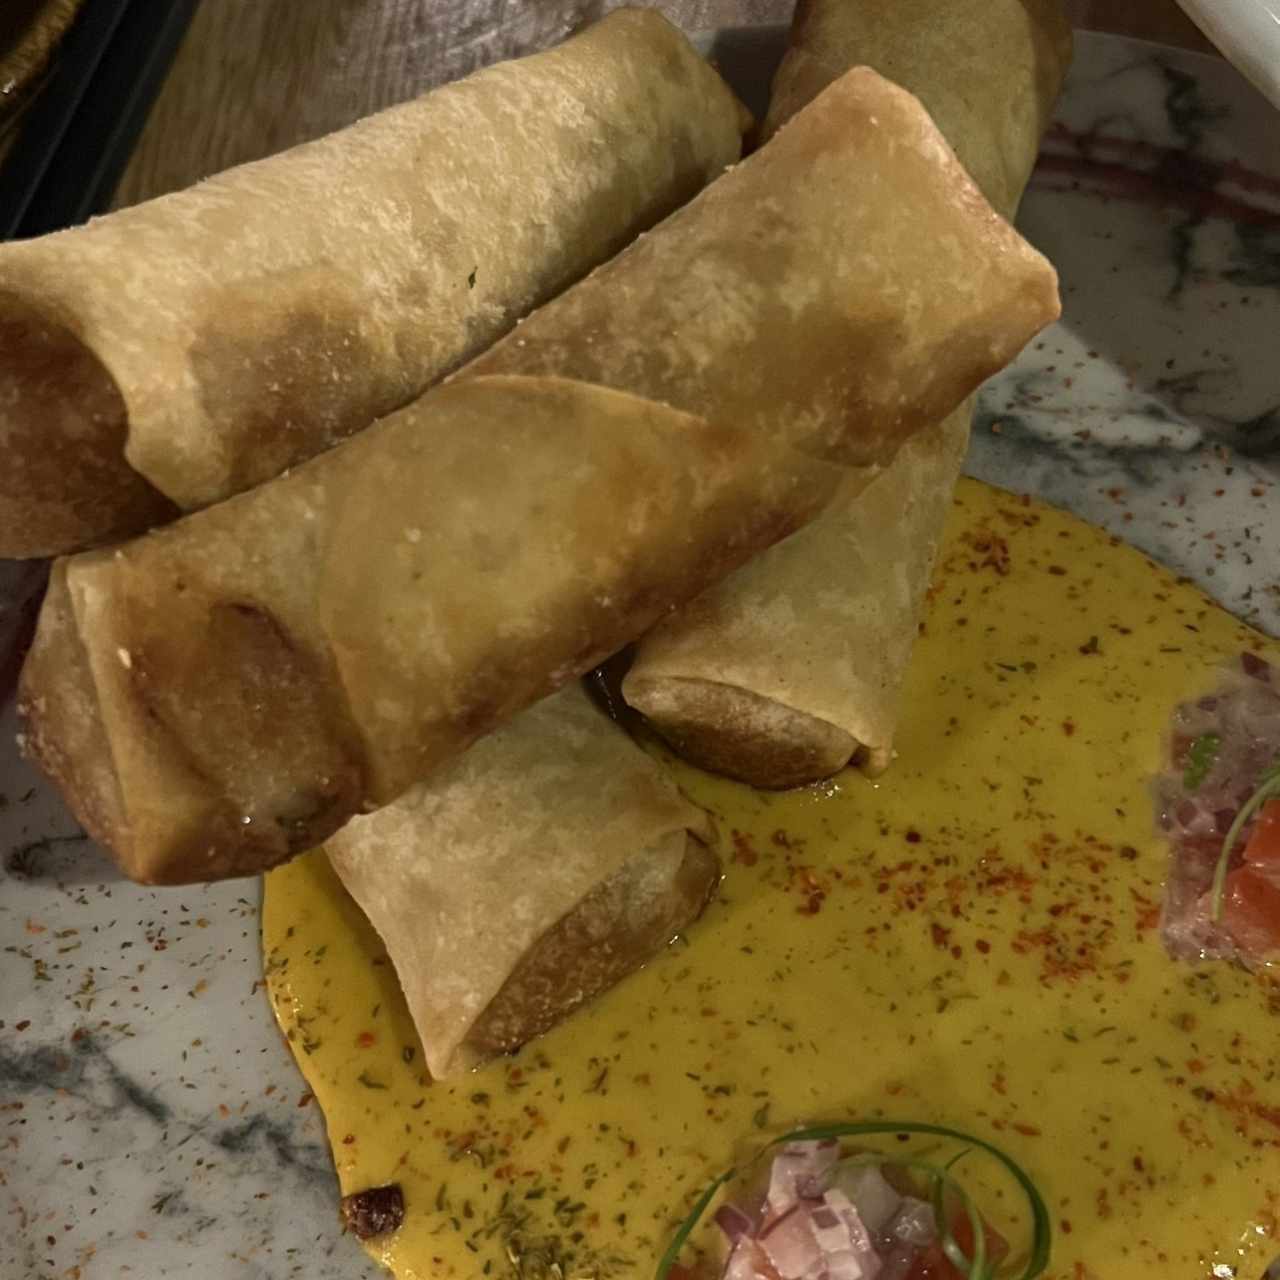 Crispy rolls